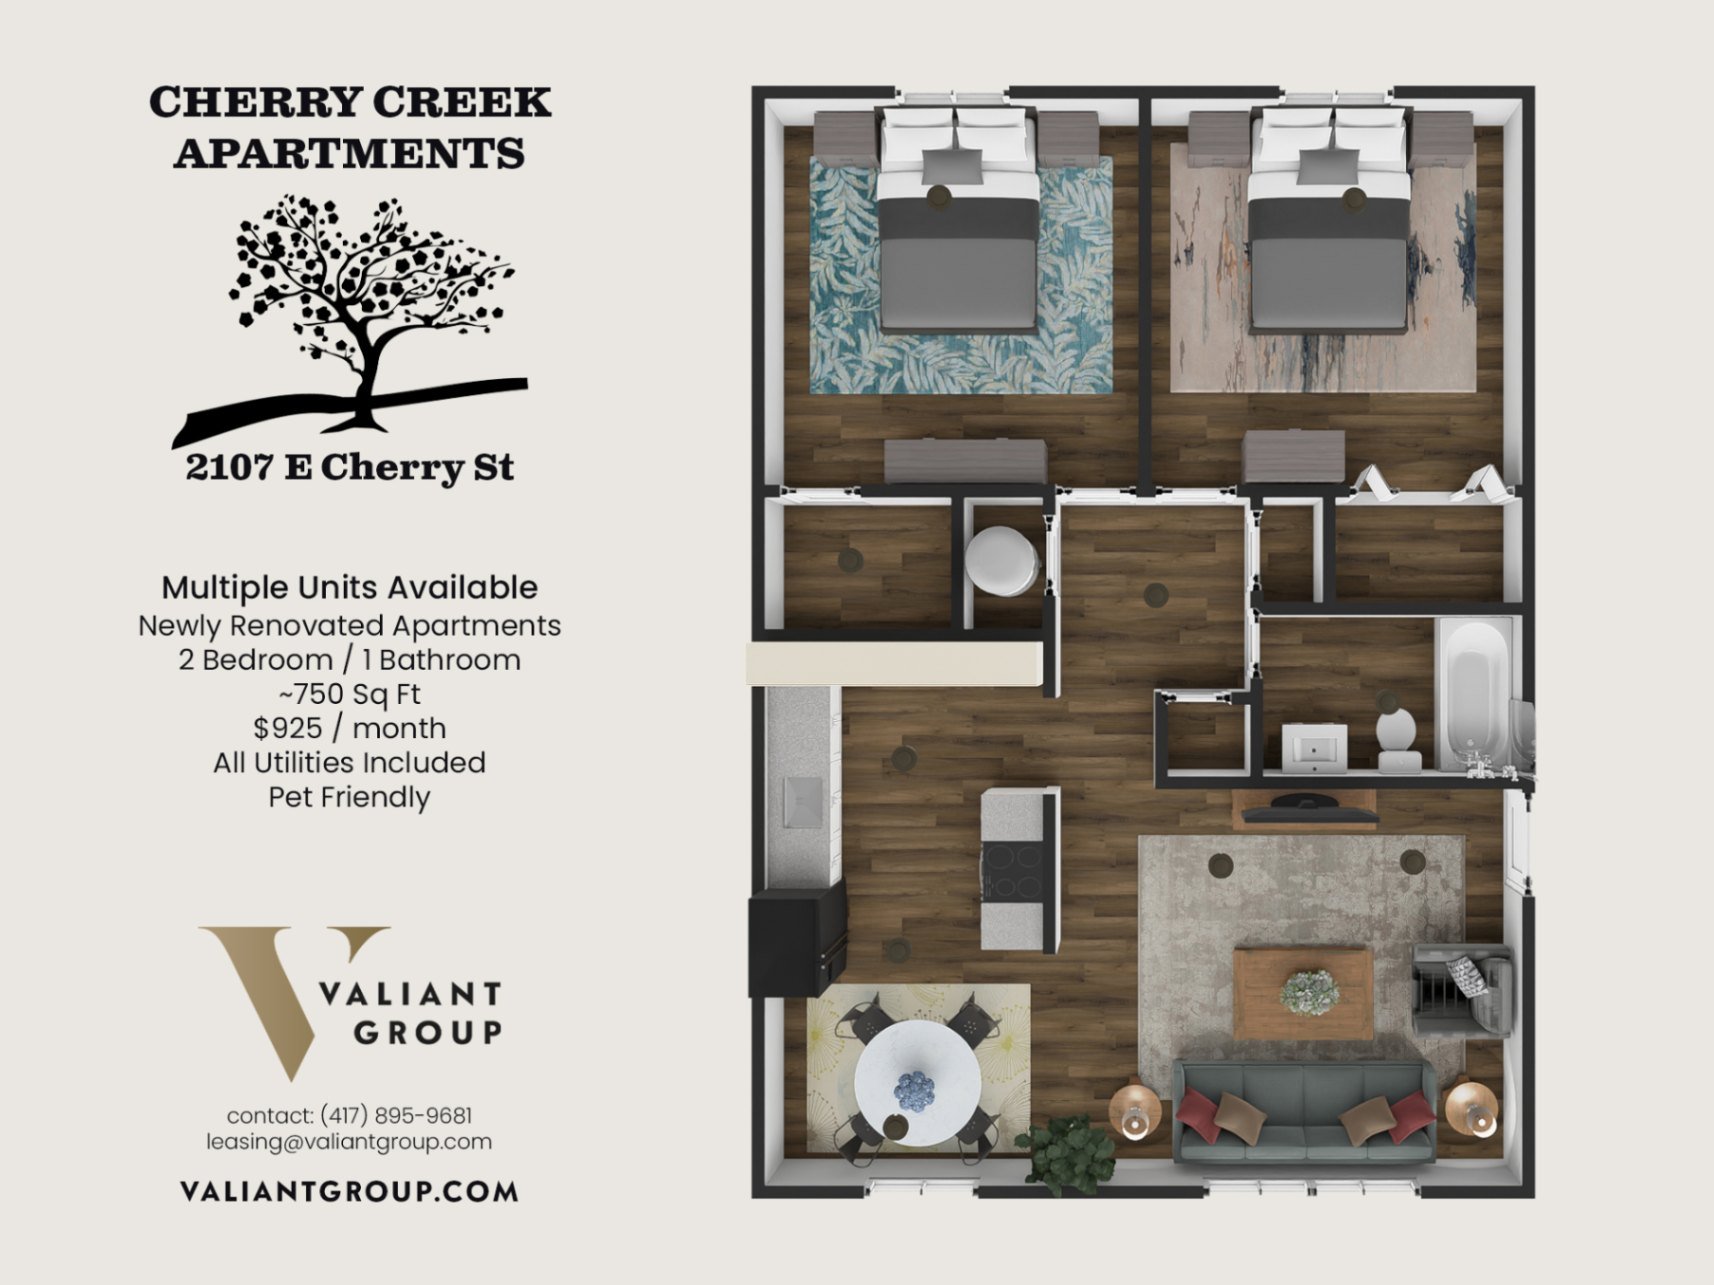 Cherry-Creek-Apartments-Springfield-MO-Floorplan-Graphic-compressed.jpg